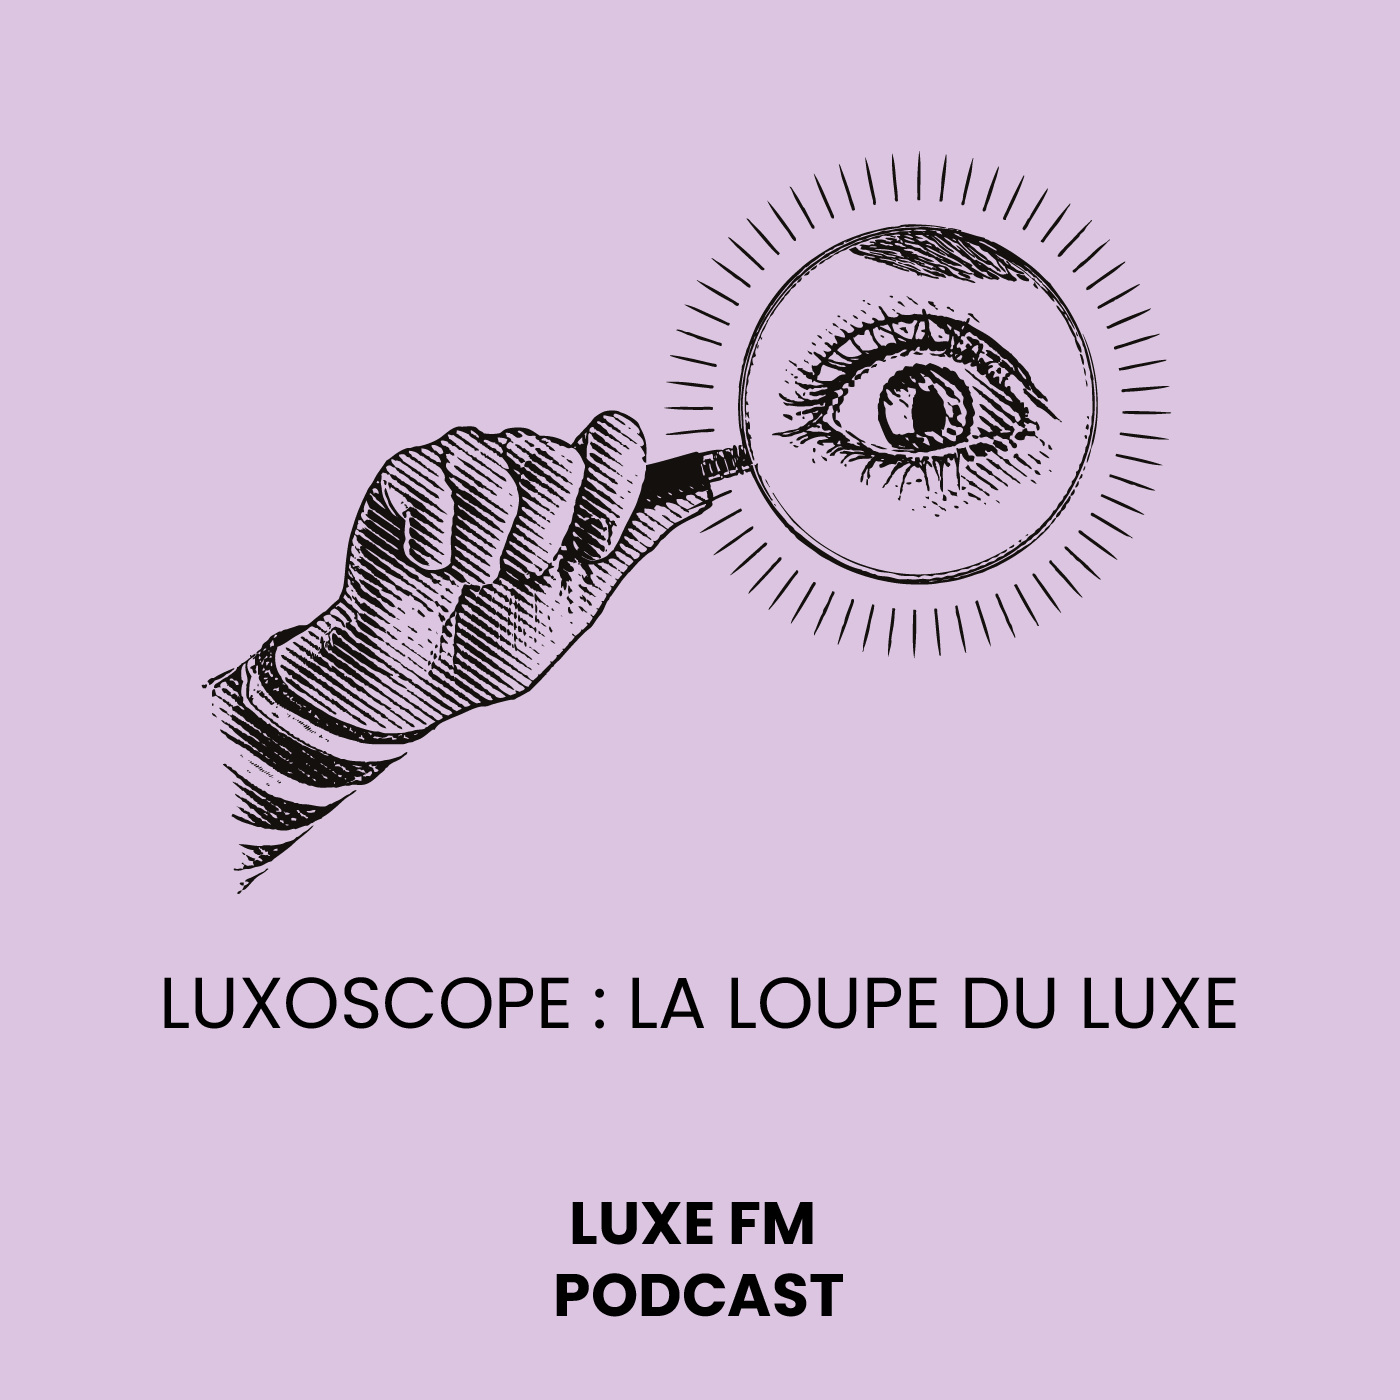 Luxoscope